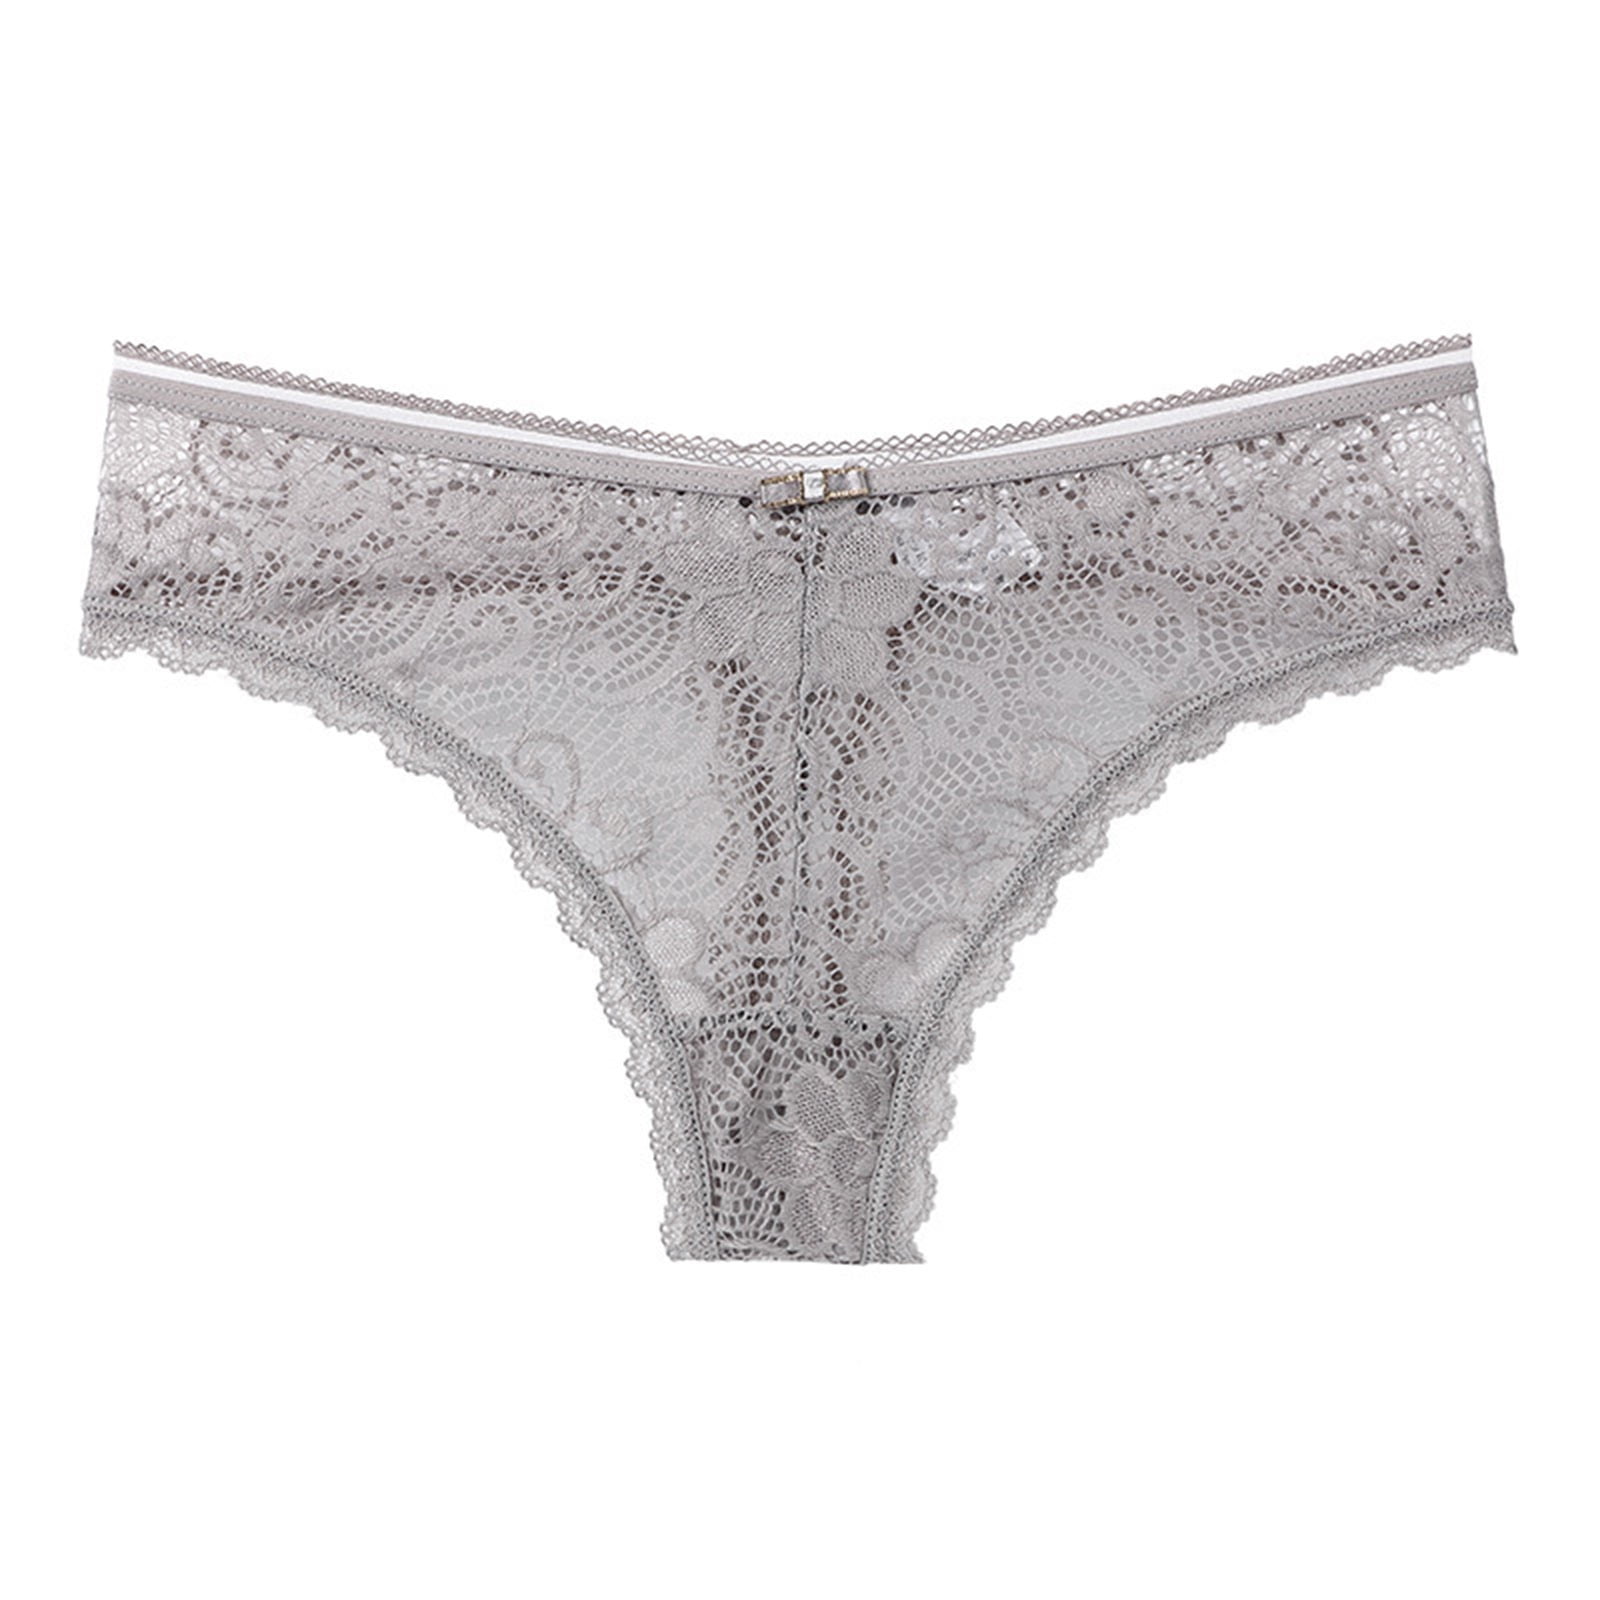 Efsteb Womens Lace Underwear Low Waist Briefs Lingerie